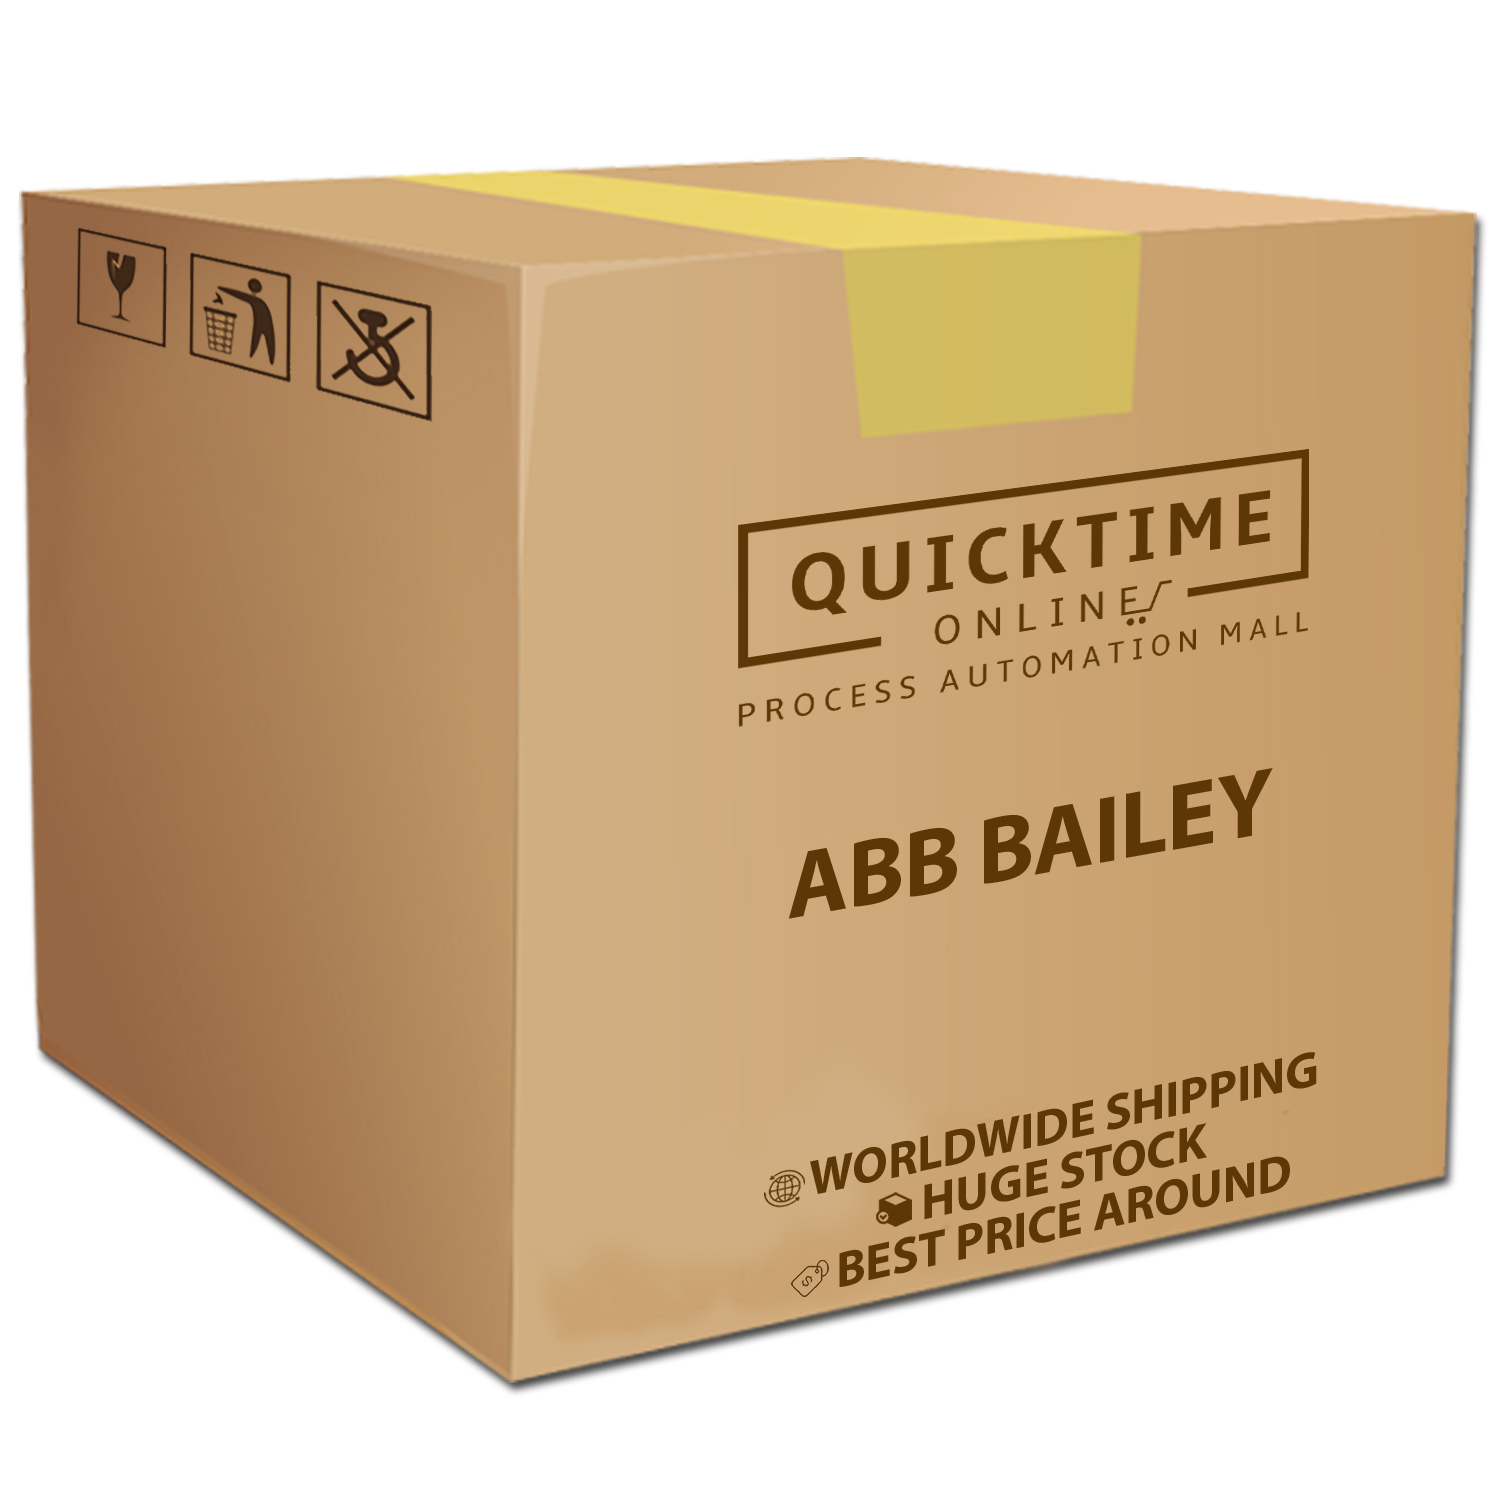 SPBLK01 New ABB Bailey Blank Faceplate